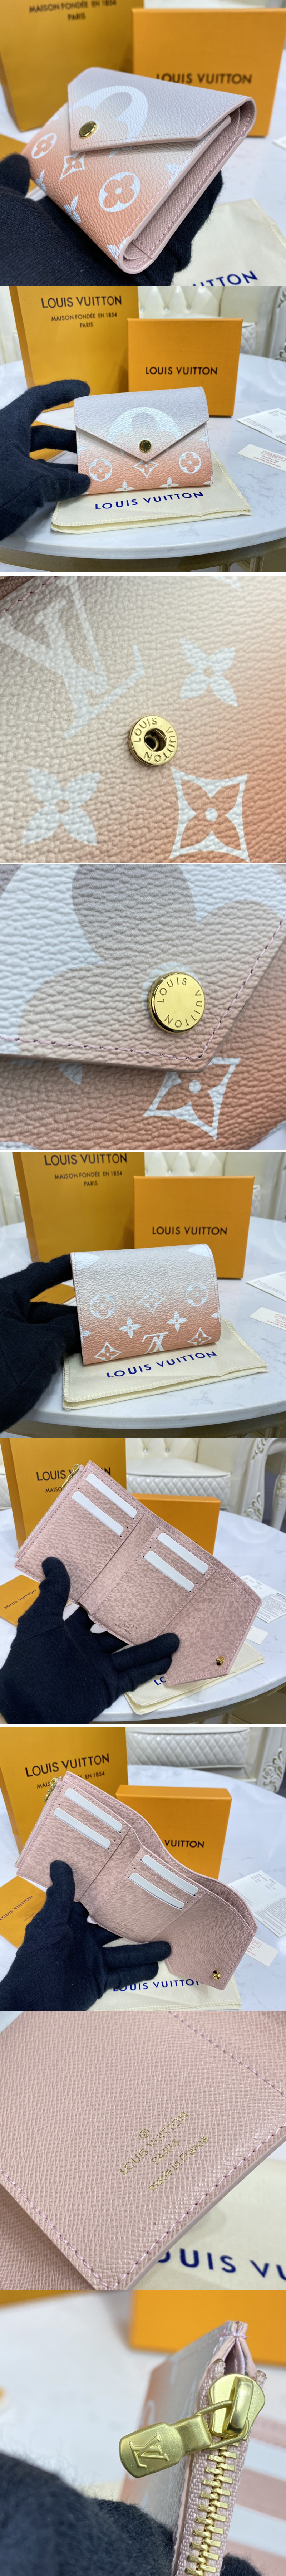 Replica Louis Vuitton Wallets